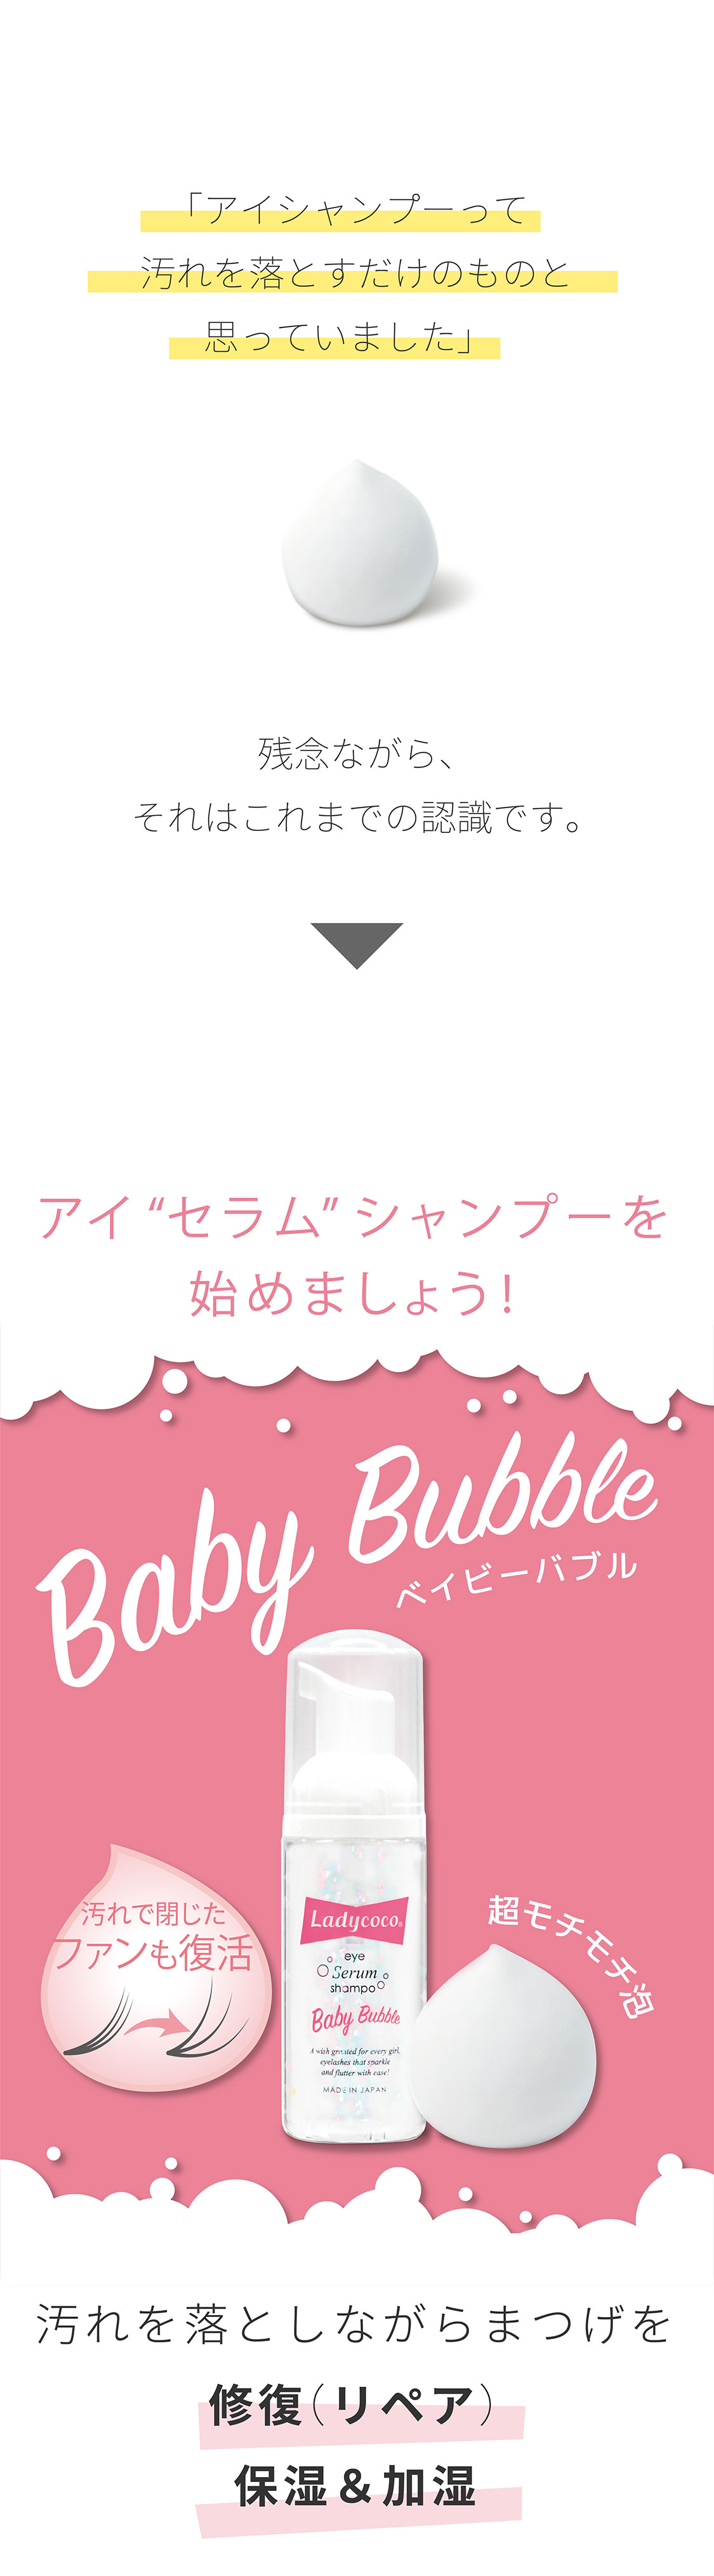 baby bubble 1